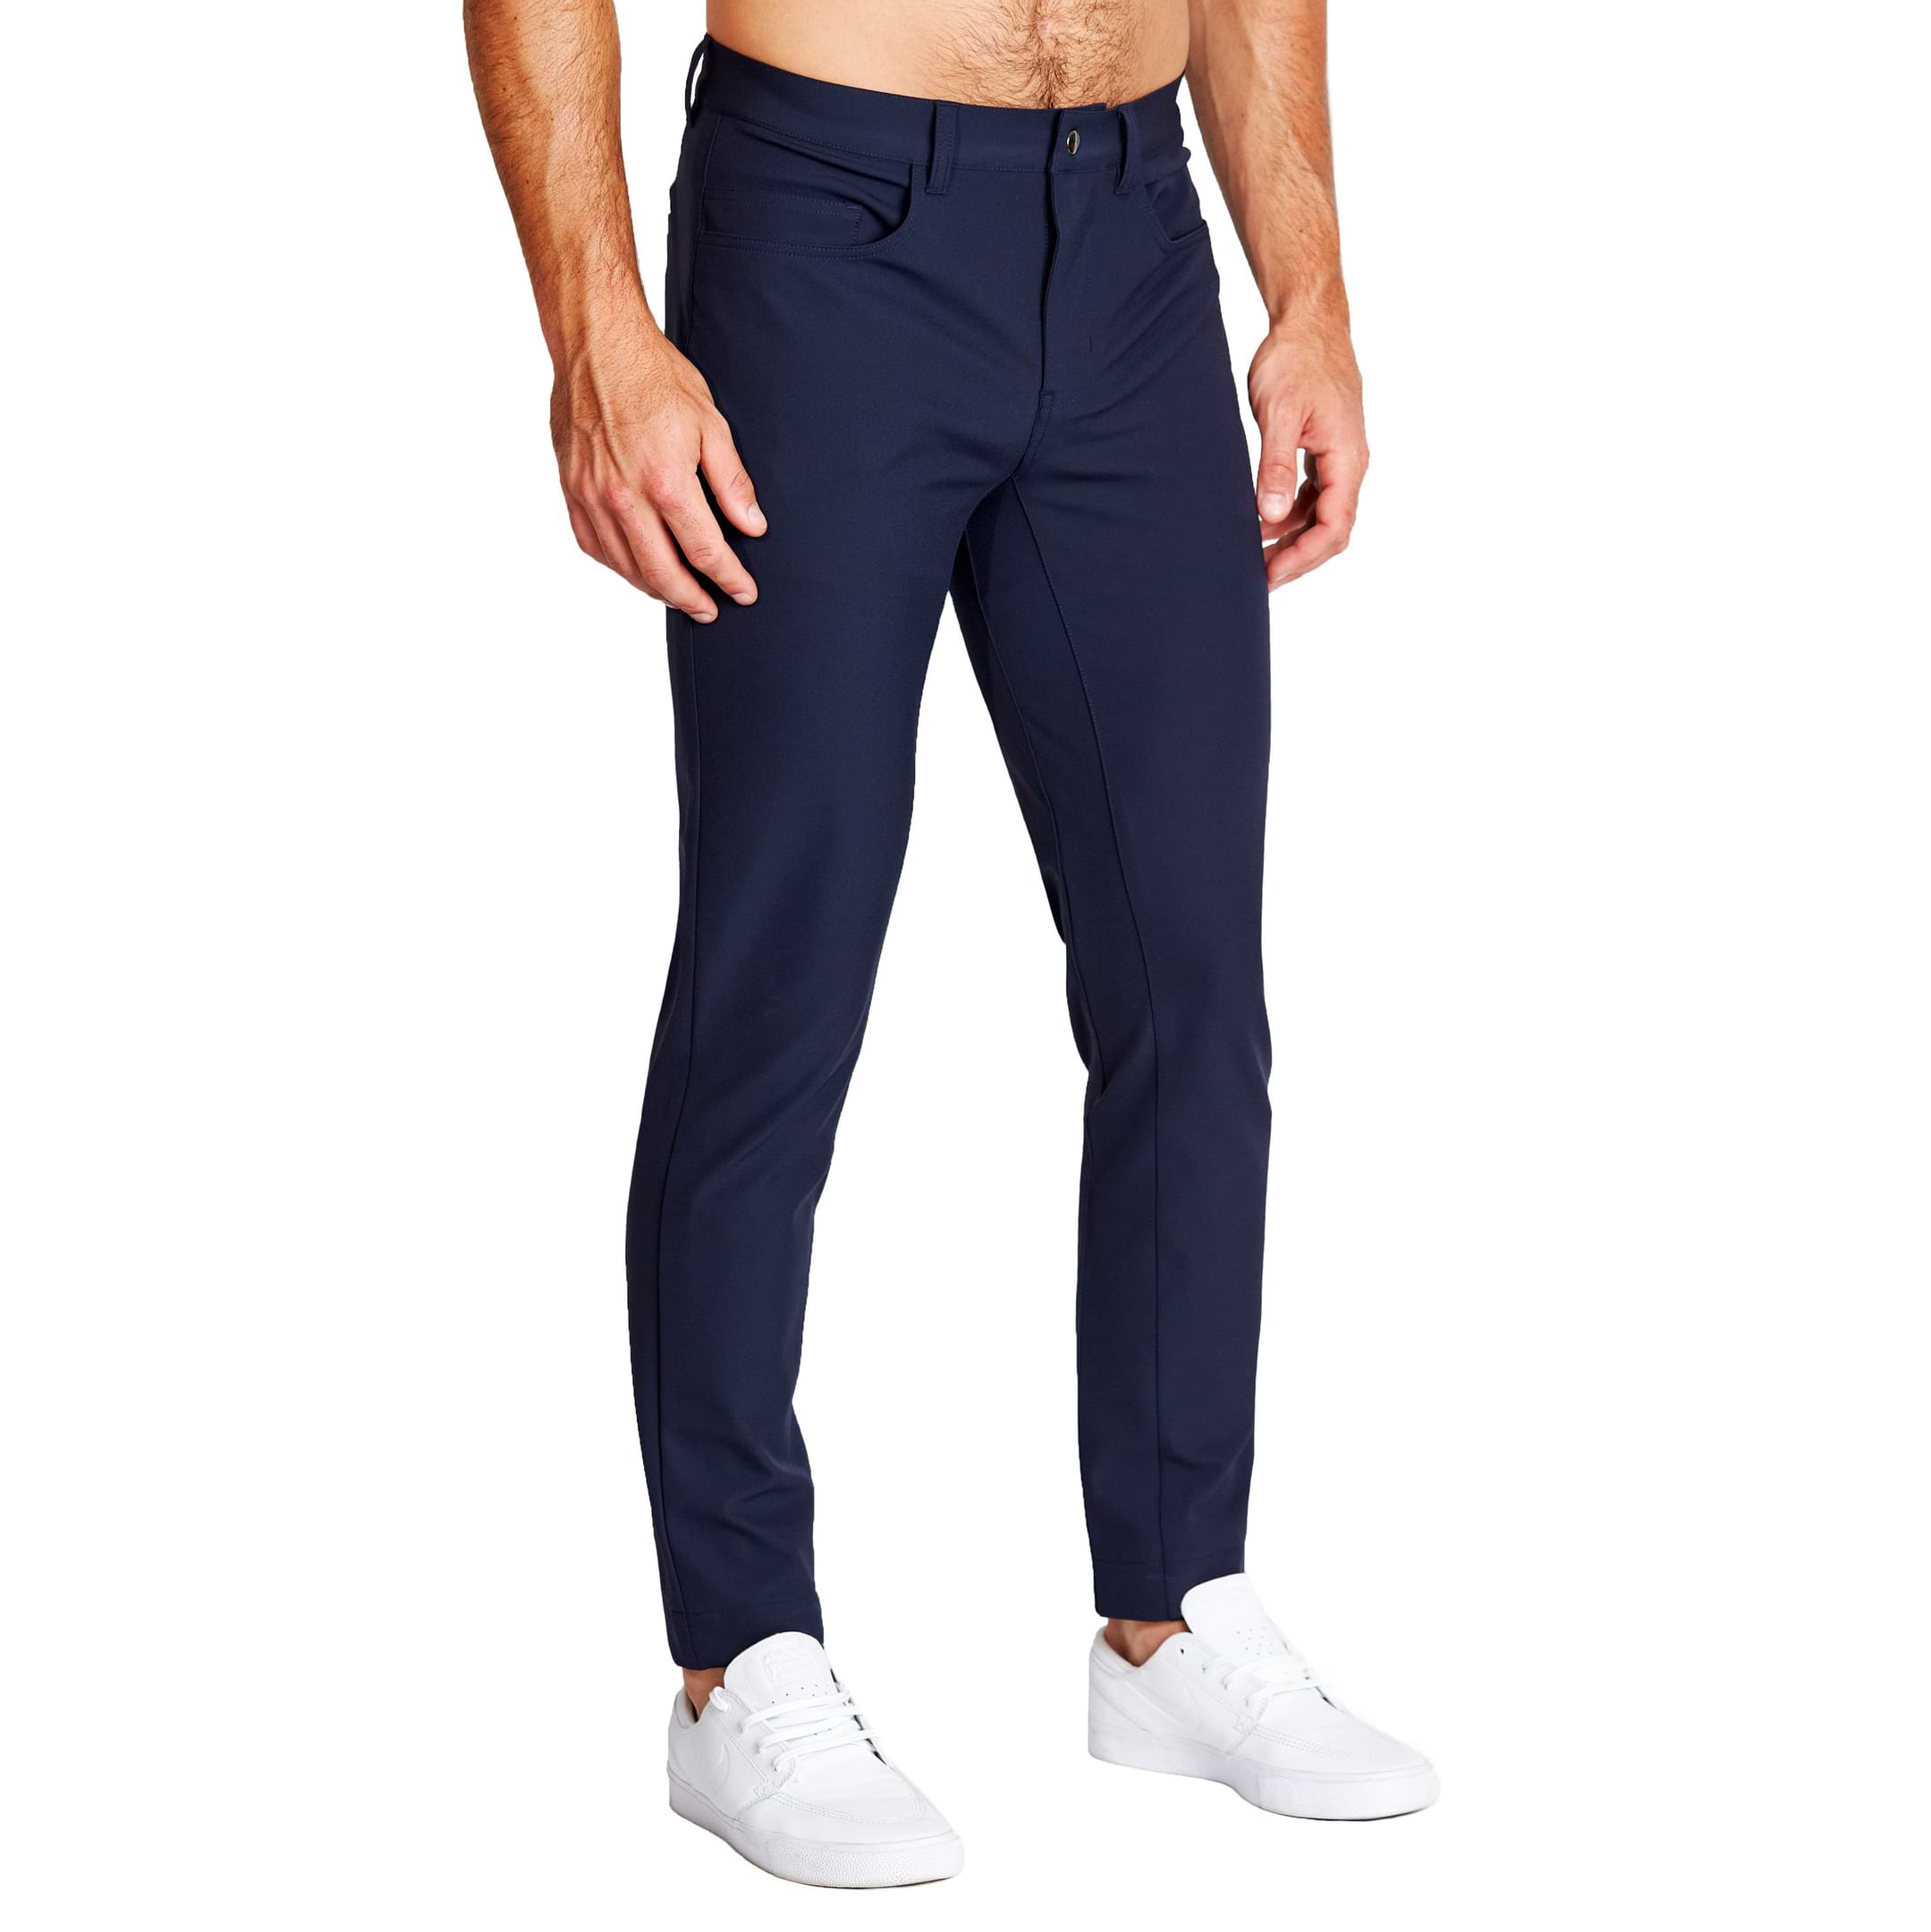 Brilliant Basics Men's Chino Pant - Navy - Size 36